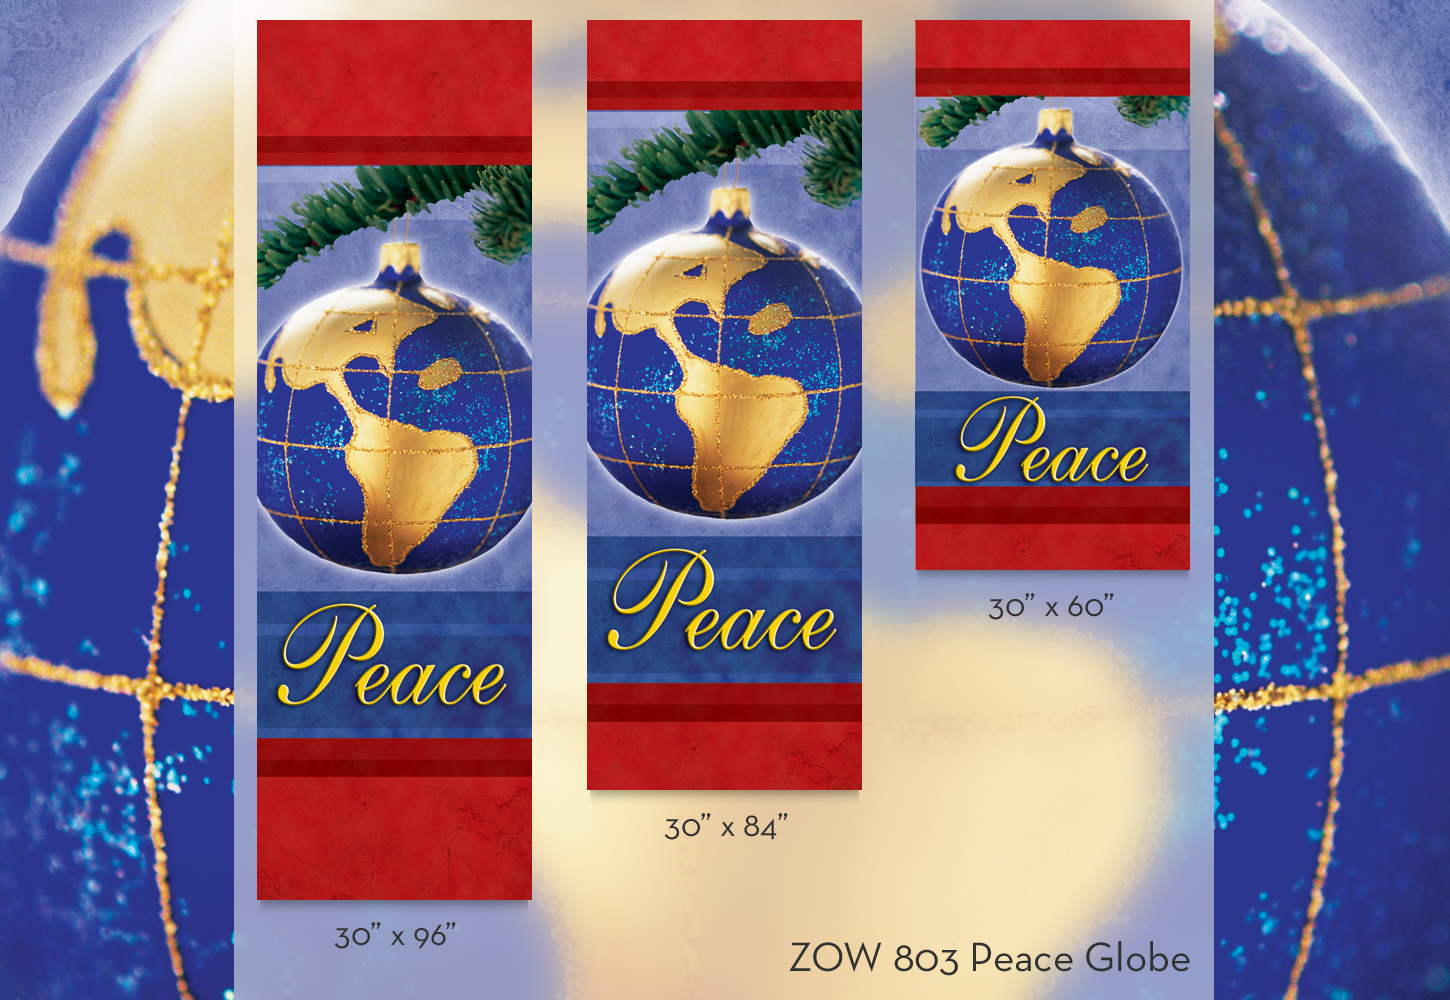 ZOW 803 Peace Globe